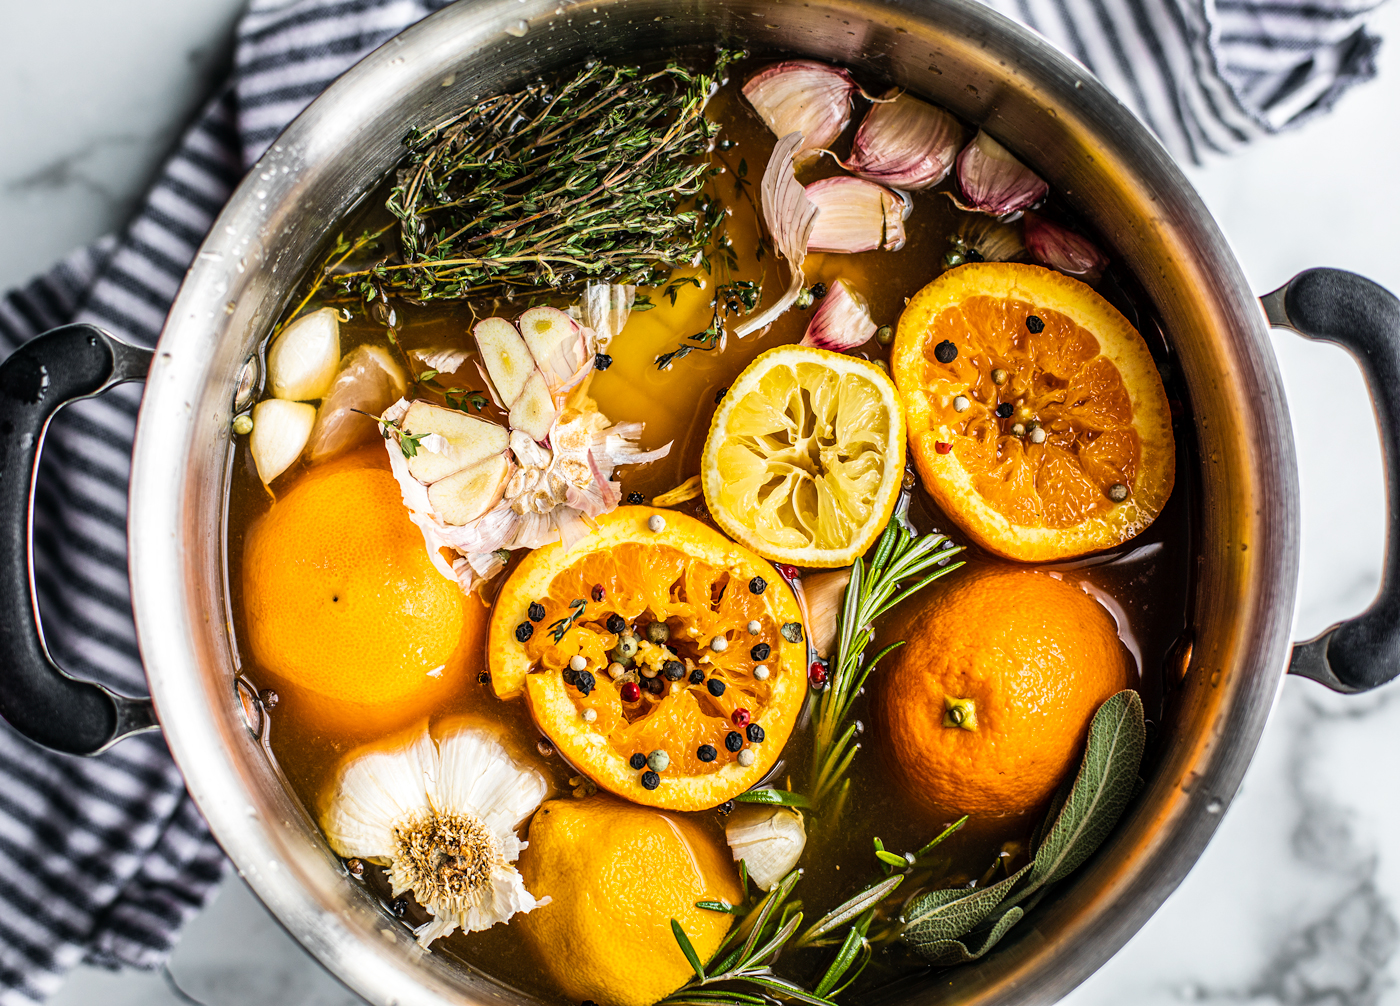 Large stock pot full of ingredients for turkey brine recipe: fresh herbs, oranges, lemons, peppercorns, and garlic.